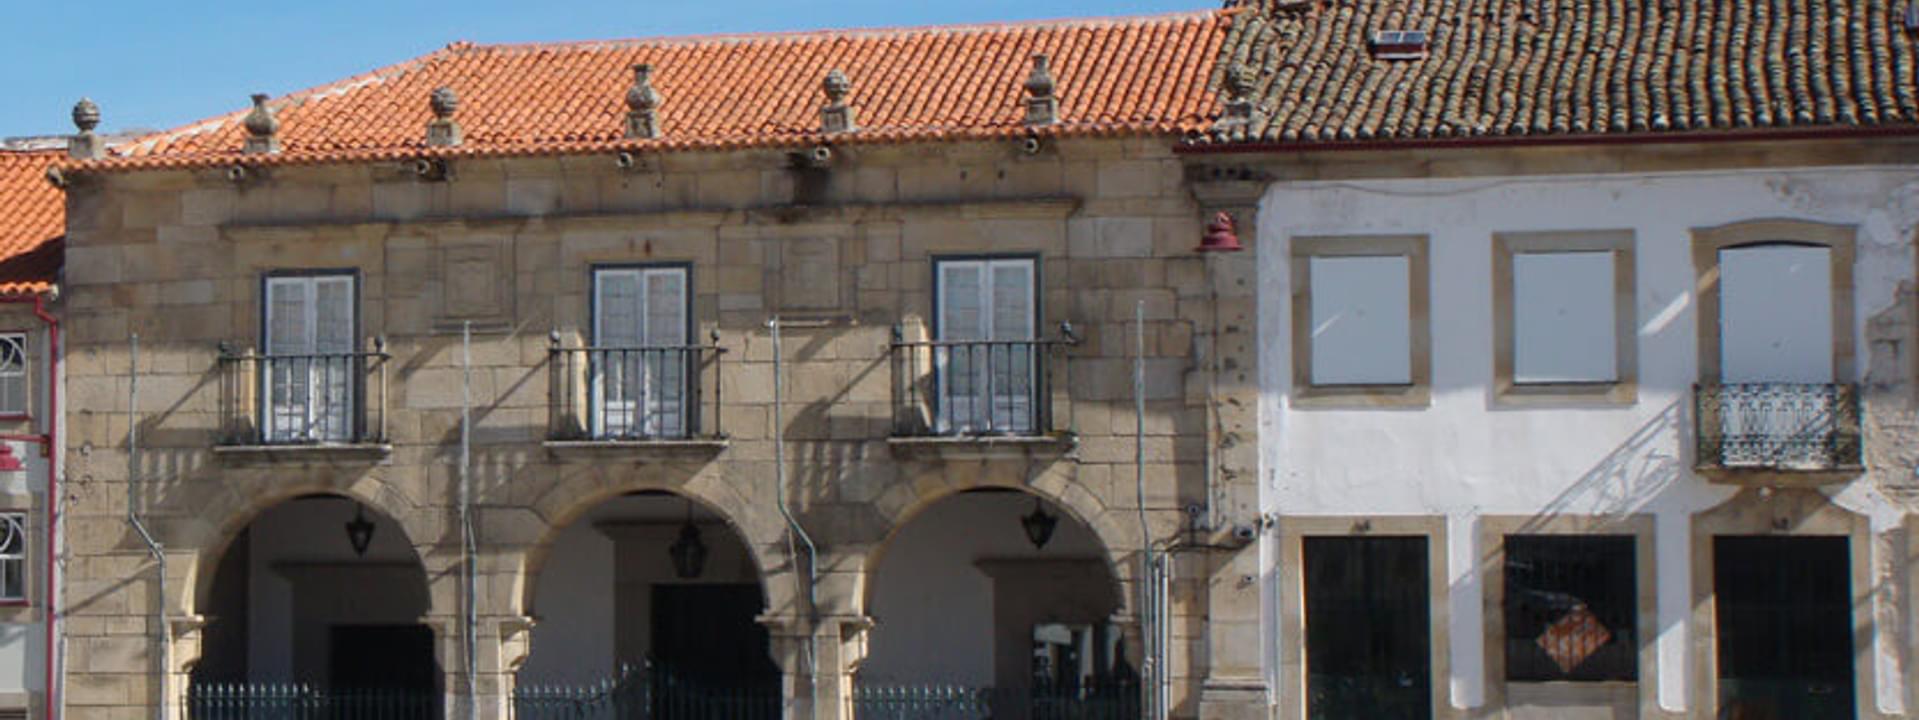 The Balconies of Guarda